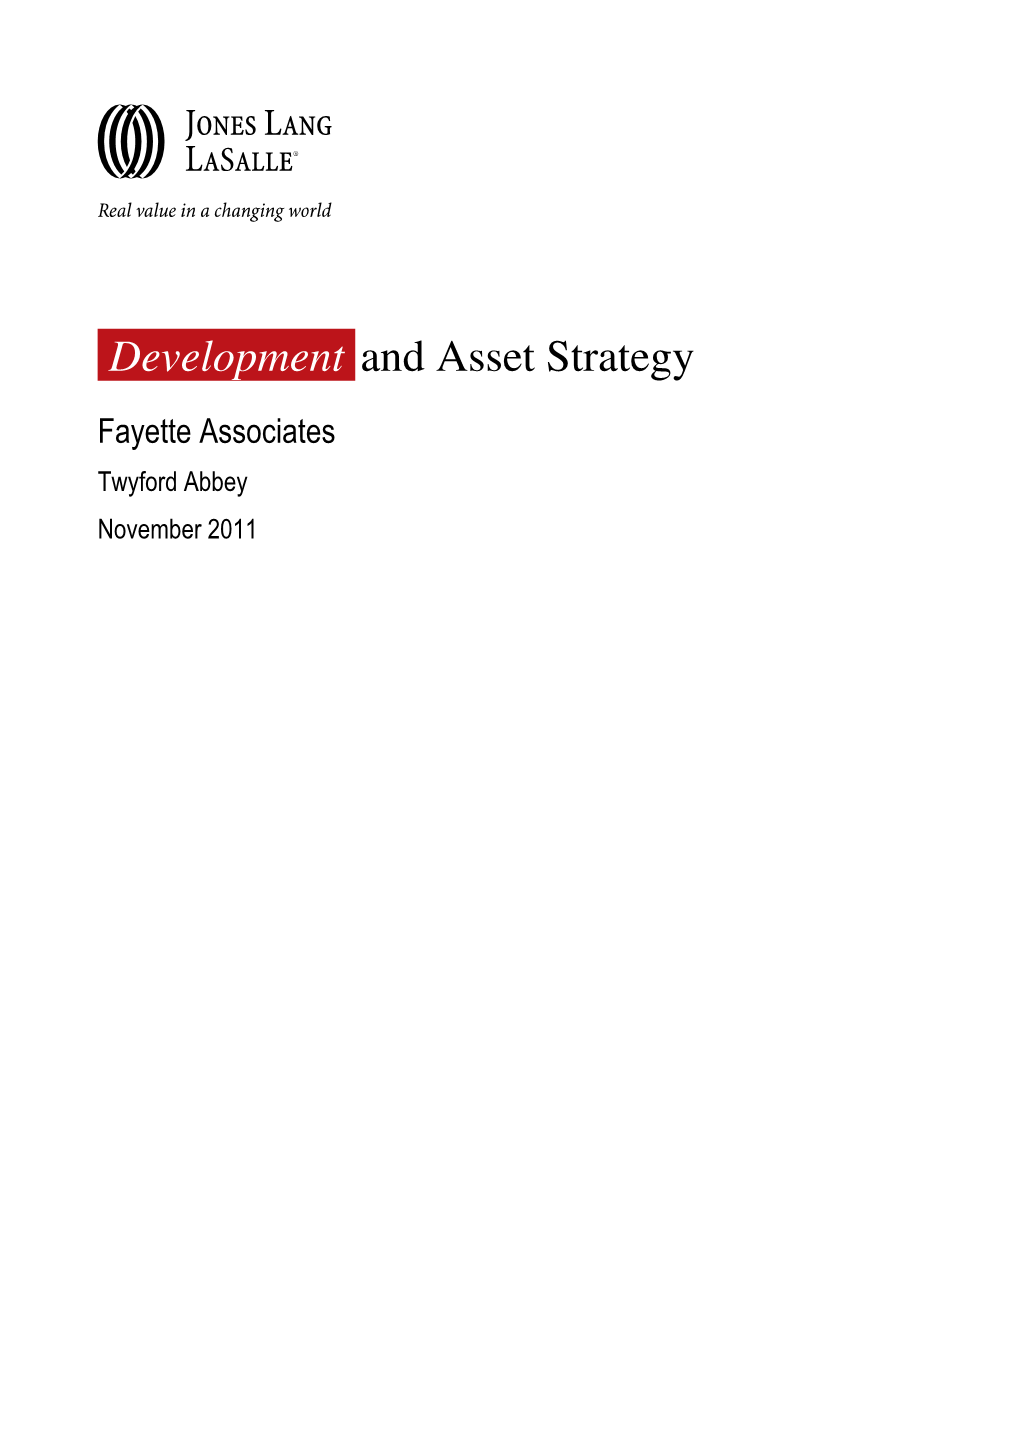 Development and Asset Strategy, Fayette Associates